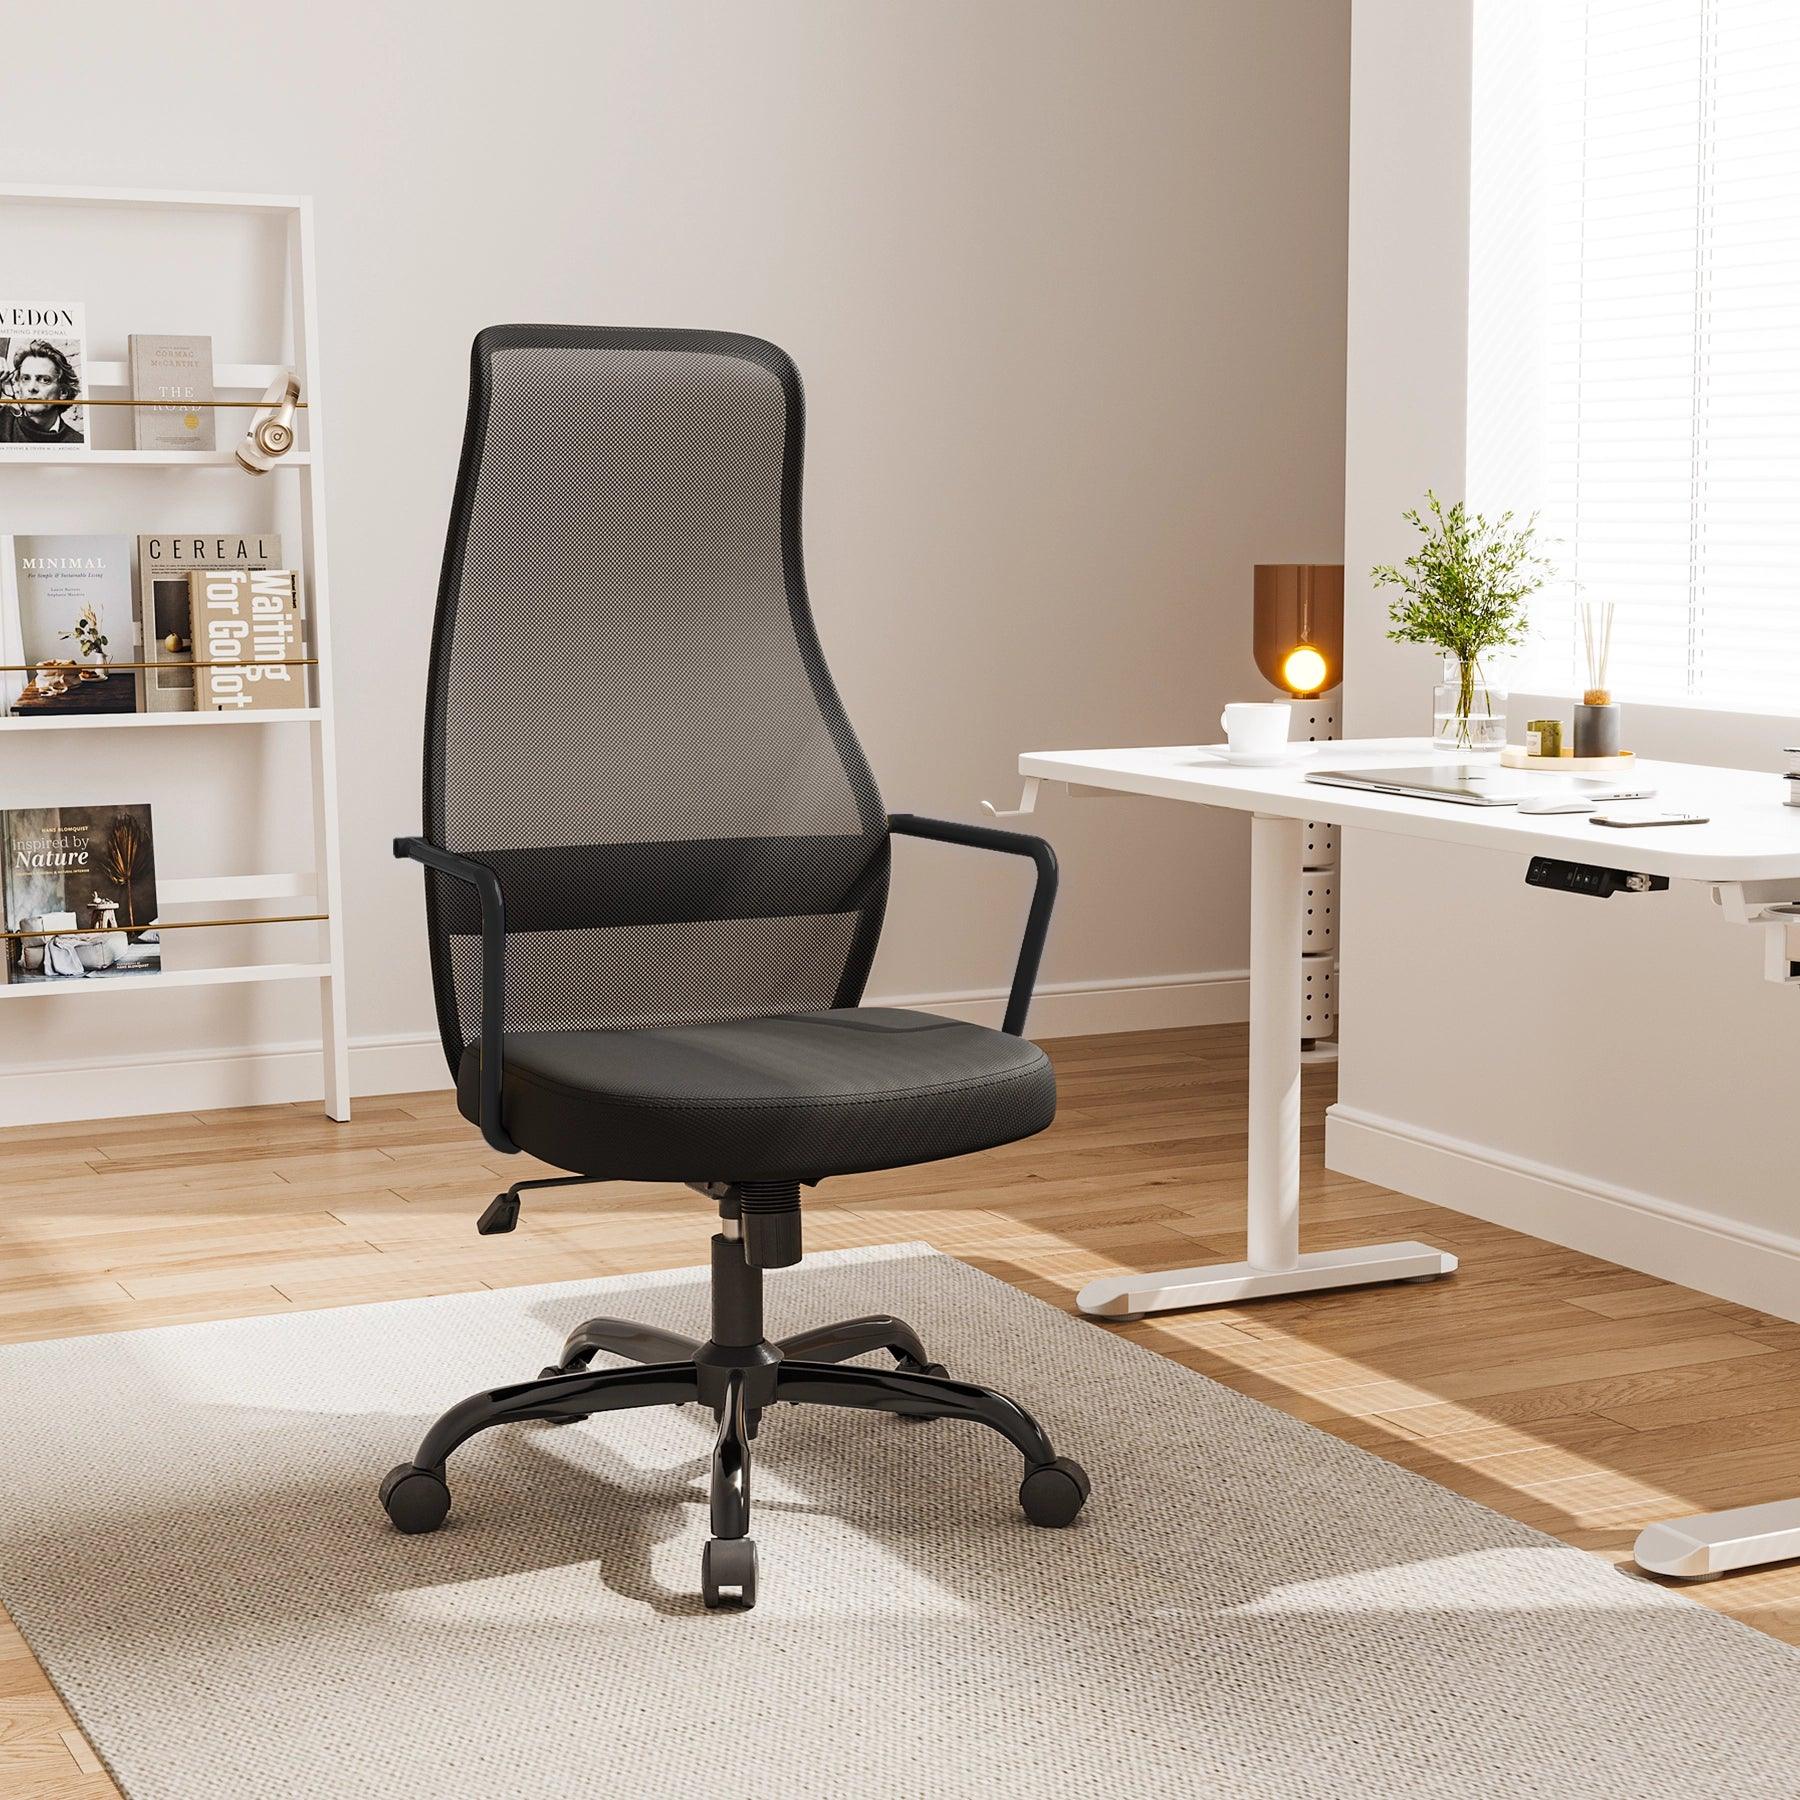 Sihoo M101C High-Back Ergonomic Office Chair - Official US Sihoo Store